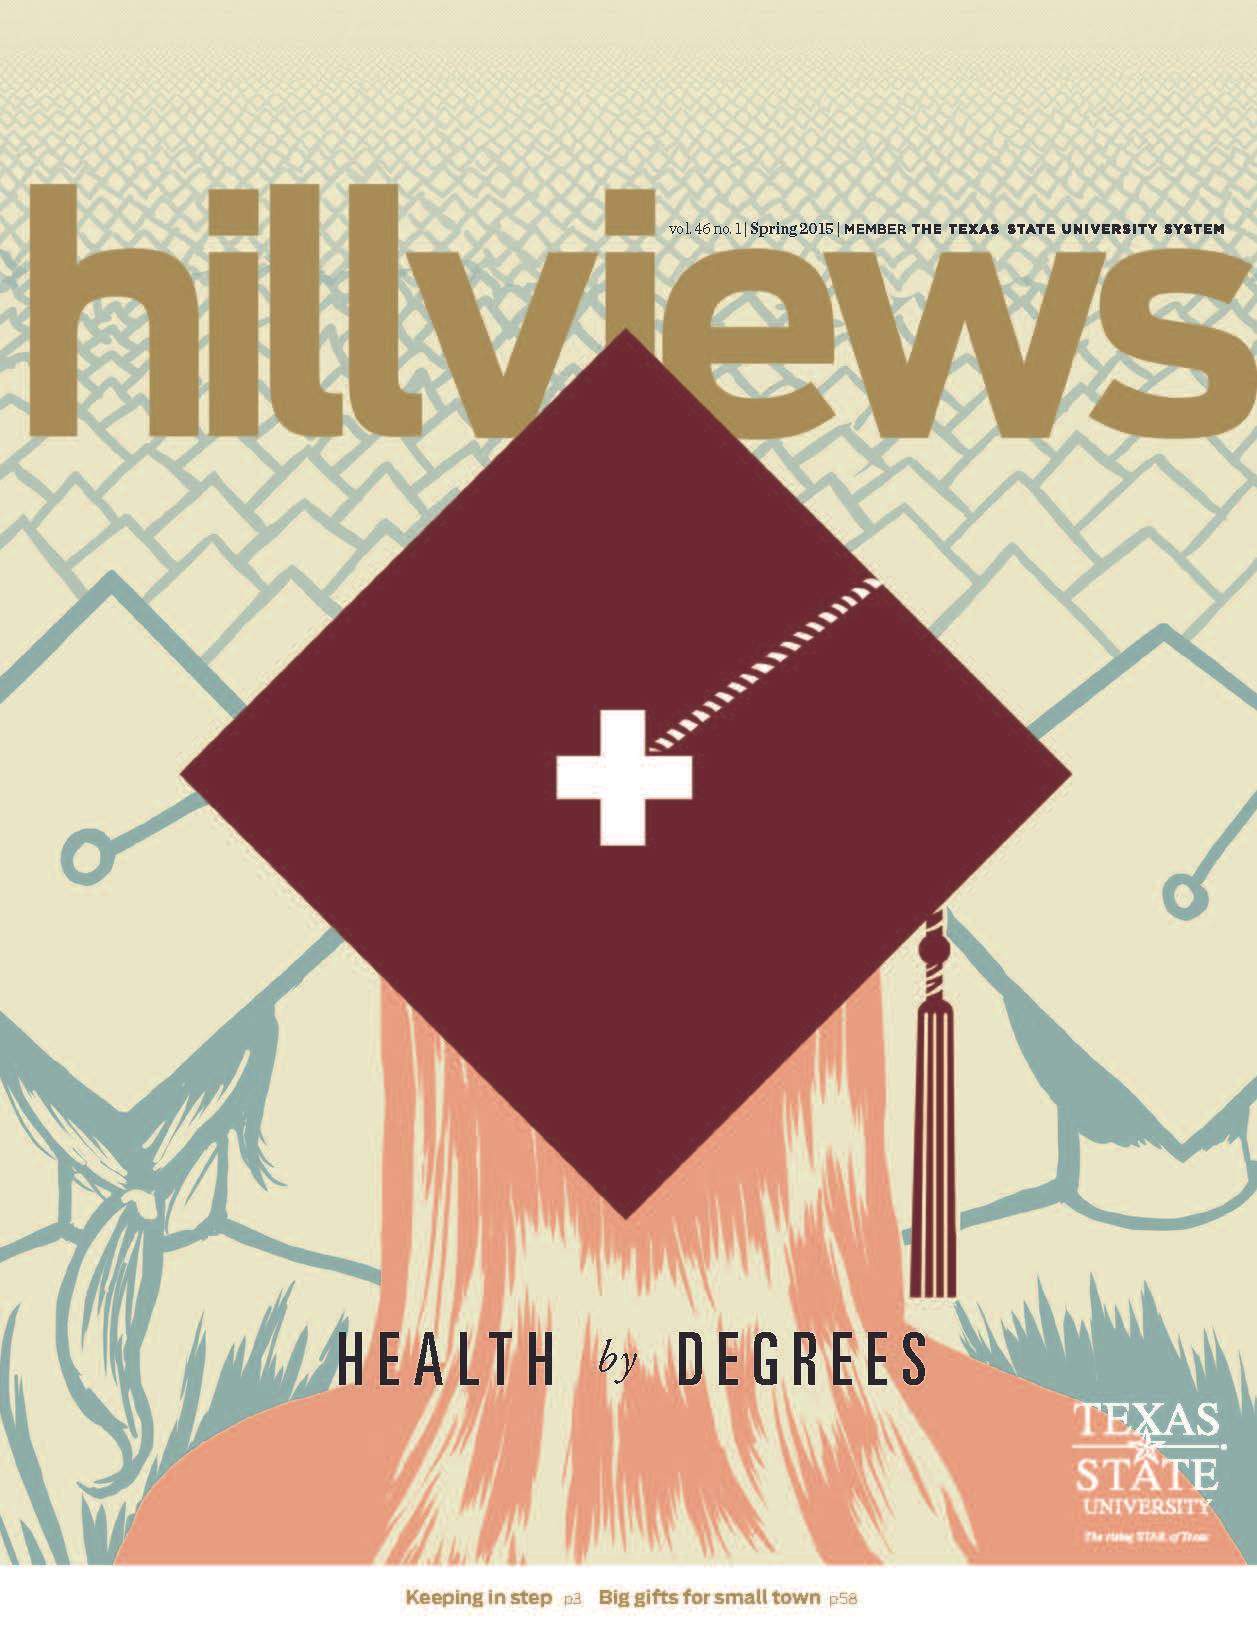 Magazine cover showing a graphic depiction of a graduation cap